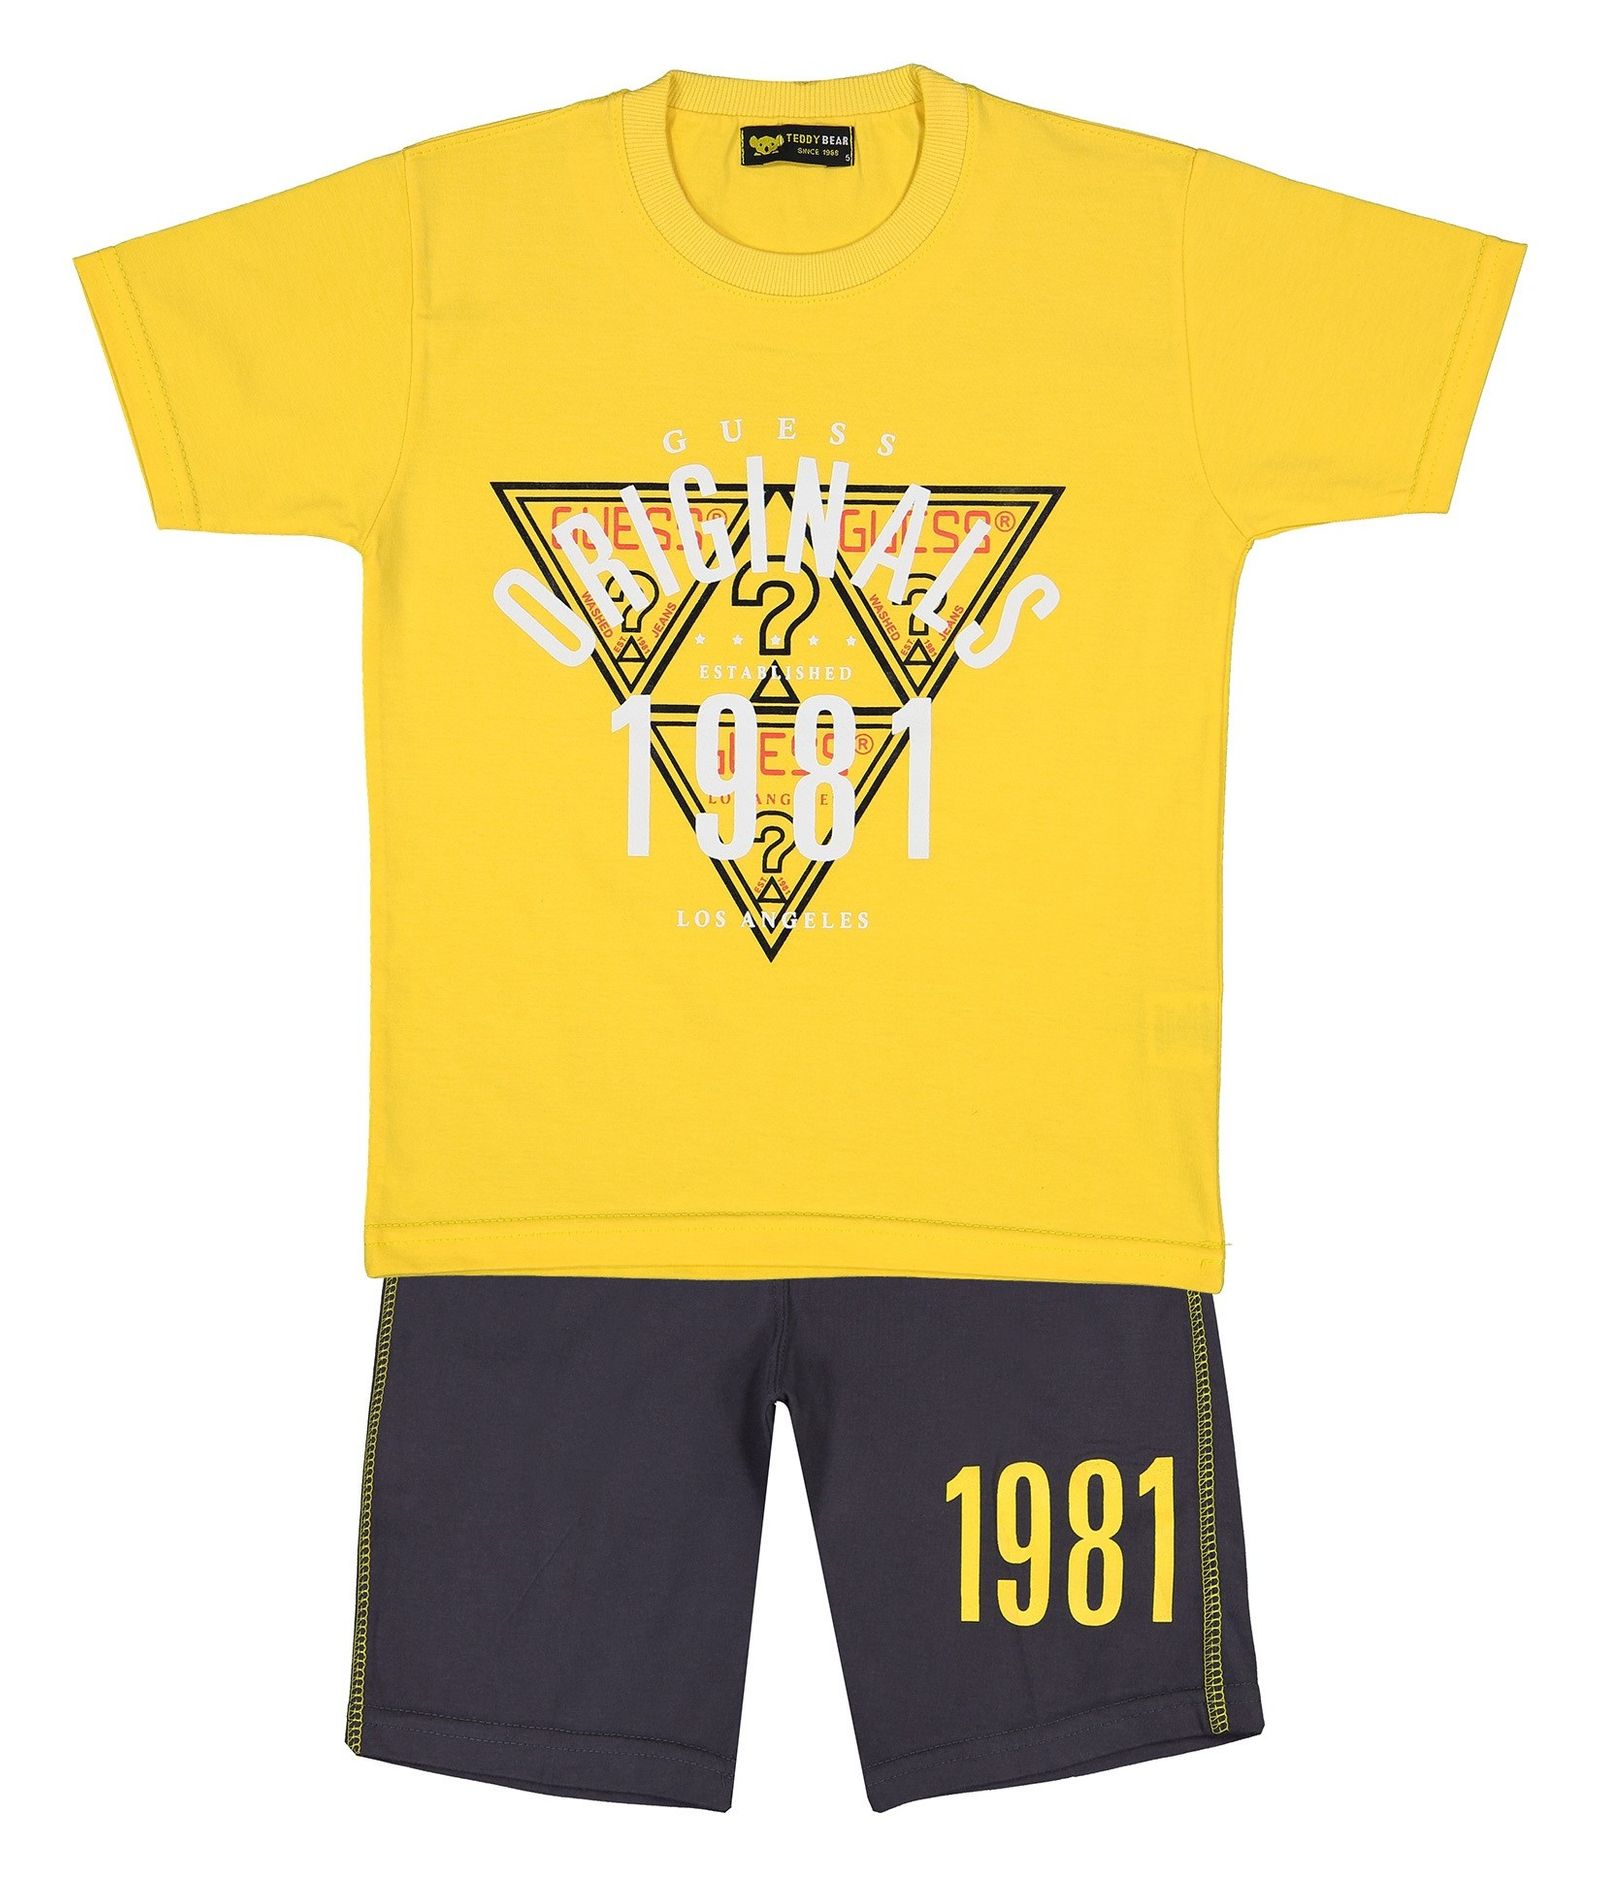 تی شرت و شلوارک نخی پسرانه 1981 - خرس کوچولو - زرد / سرمه اي - 1